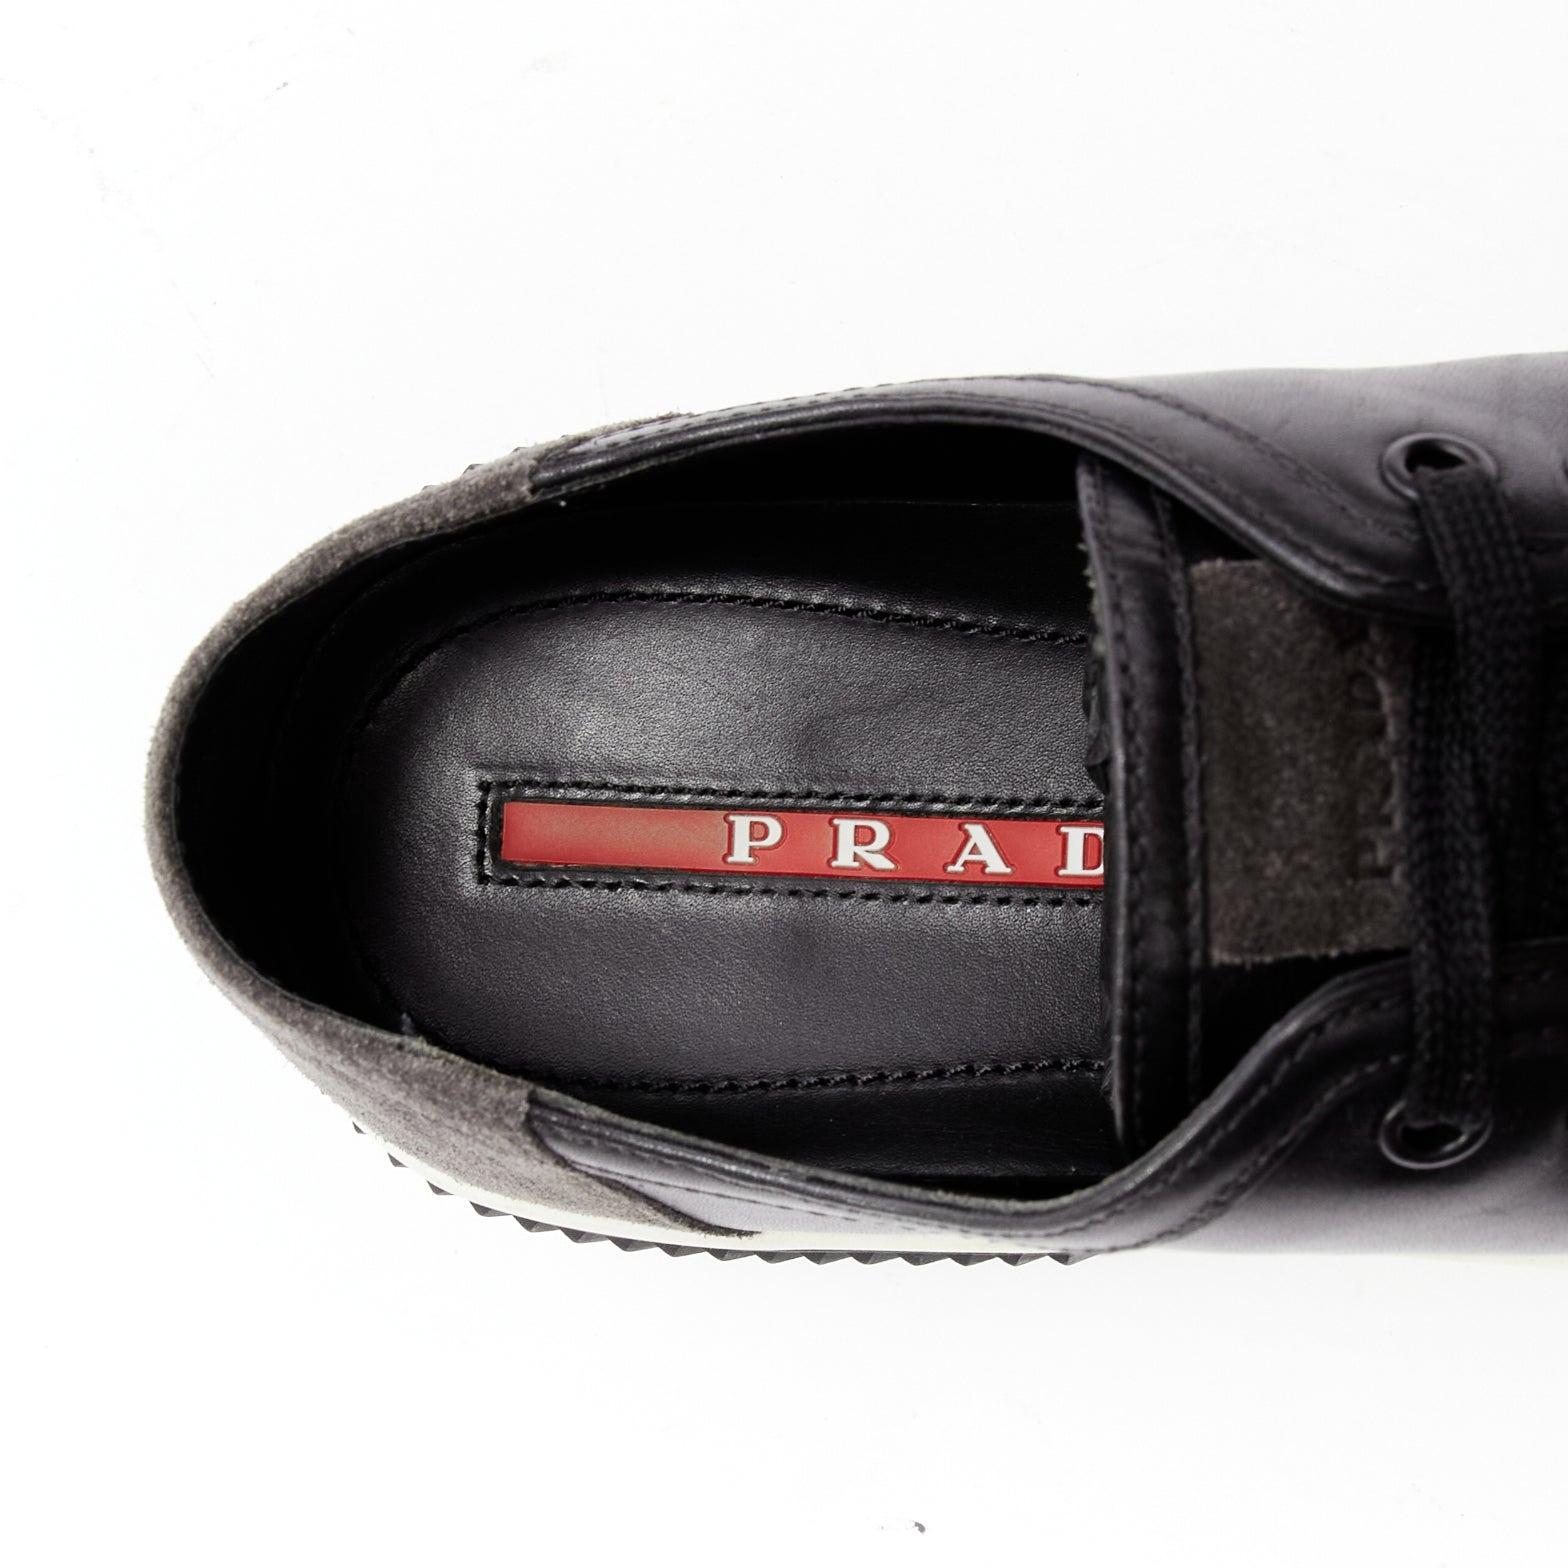 PRADA Stratus black grey suede leather low top sneakers UK5.5 EU39.5 For Sale 4